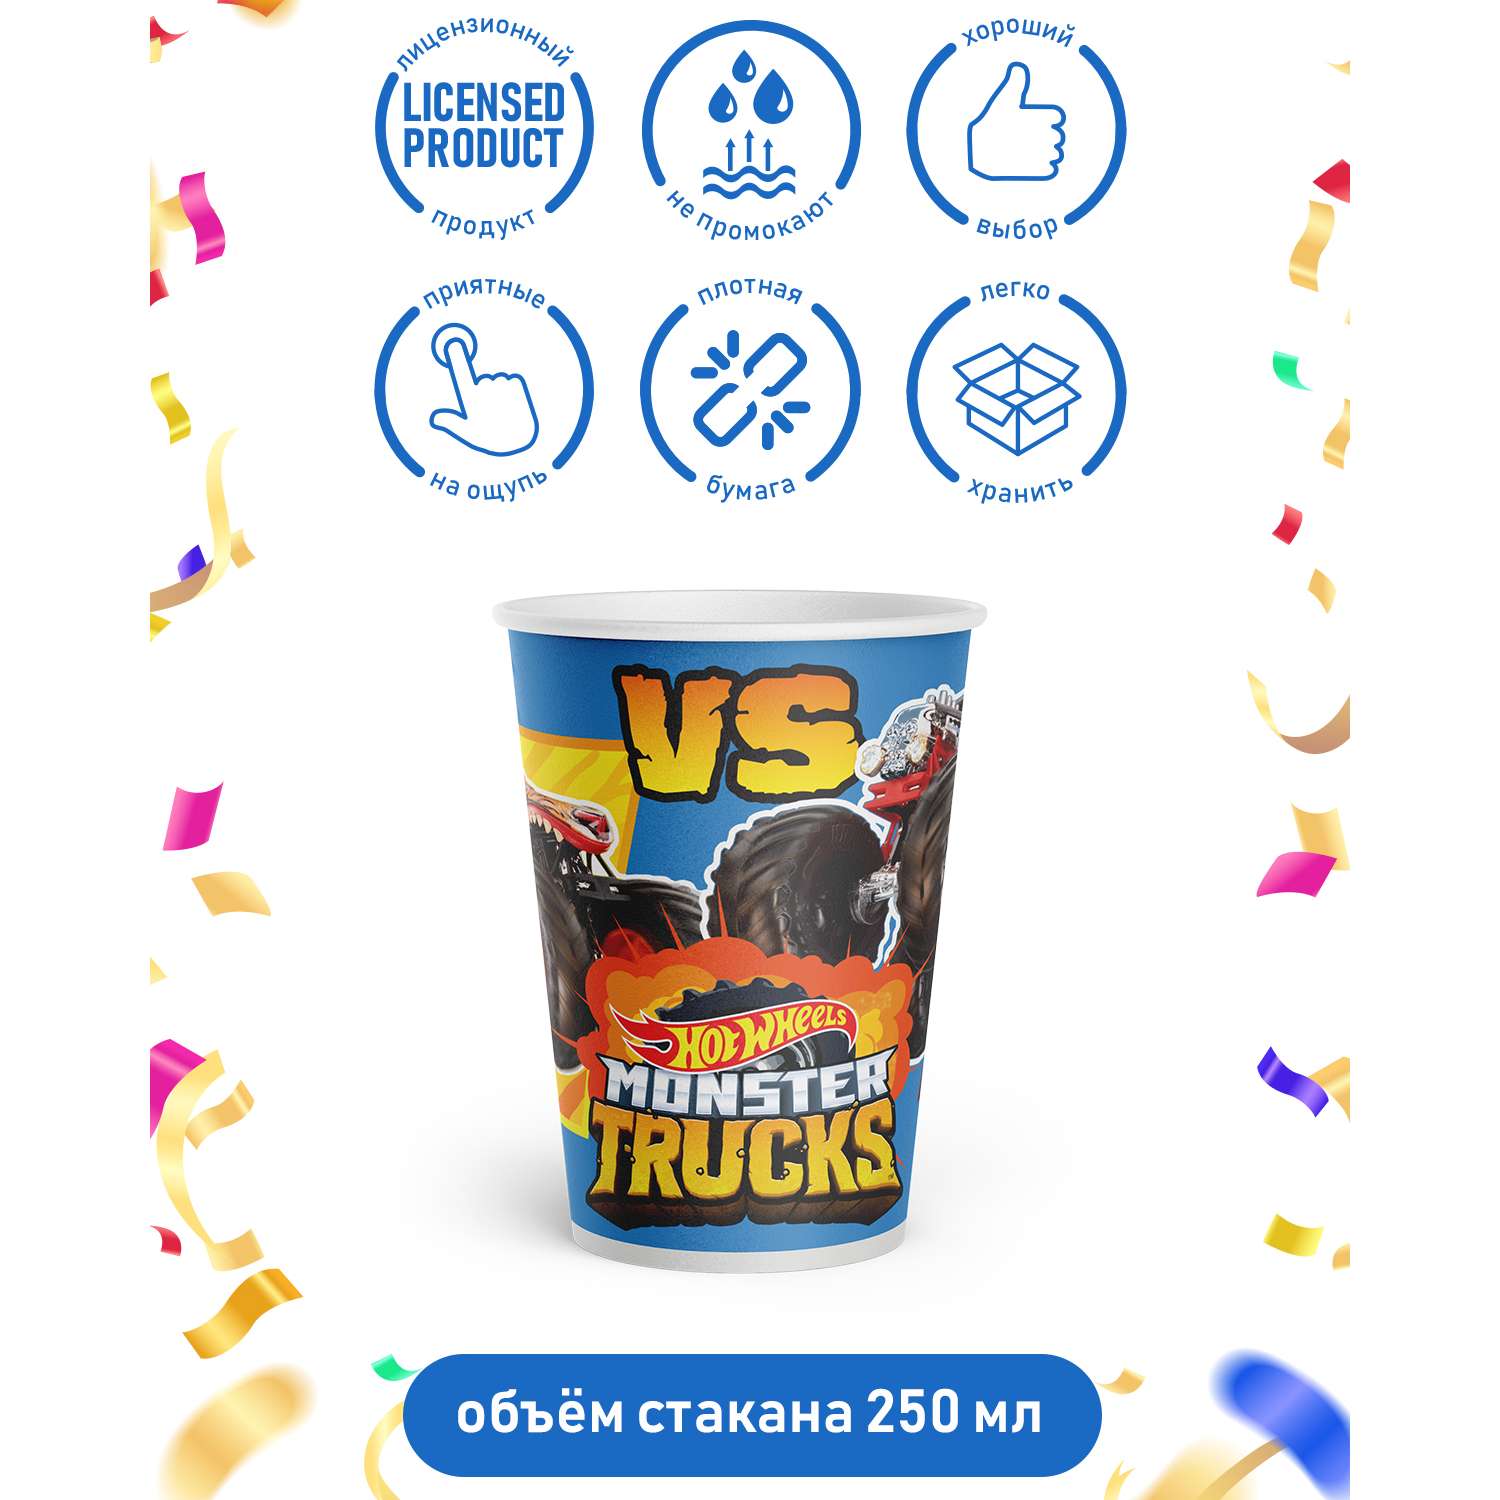 Набор одноразовой посуды PrioritY для праздника Hot Wheels Monster Trucks - фото 2